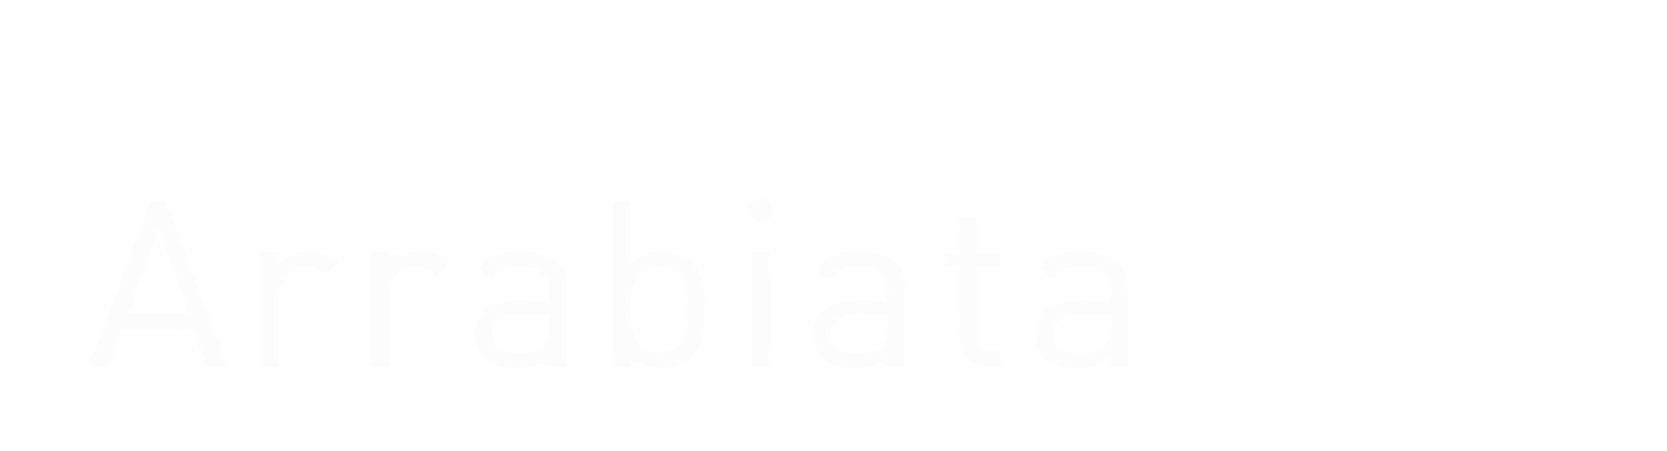 Arrabiata EDLIGO Talent Analytics Partner